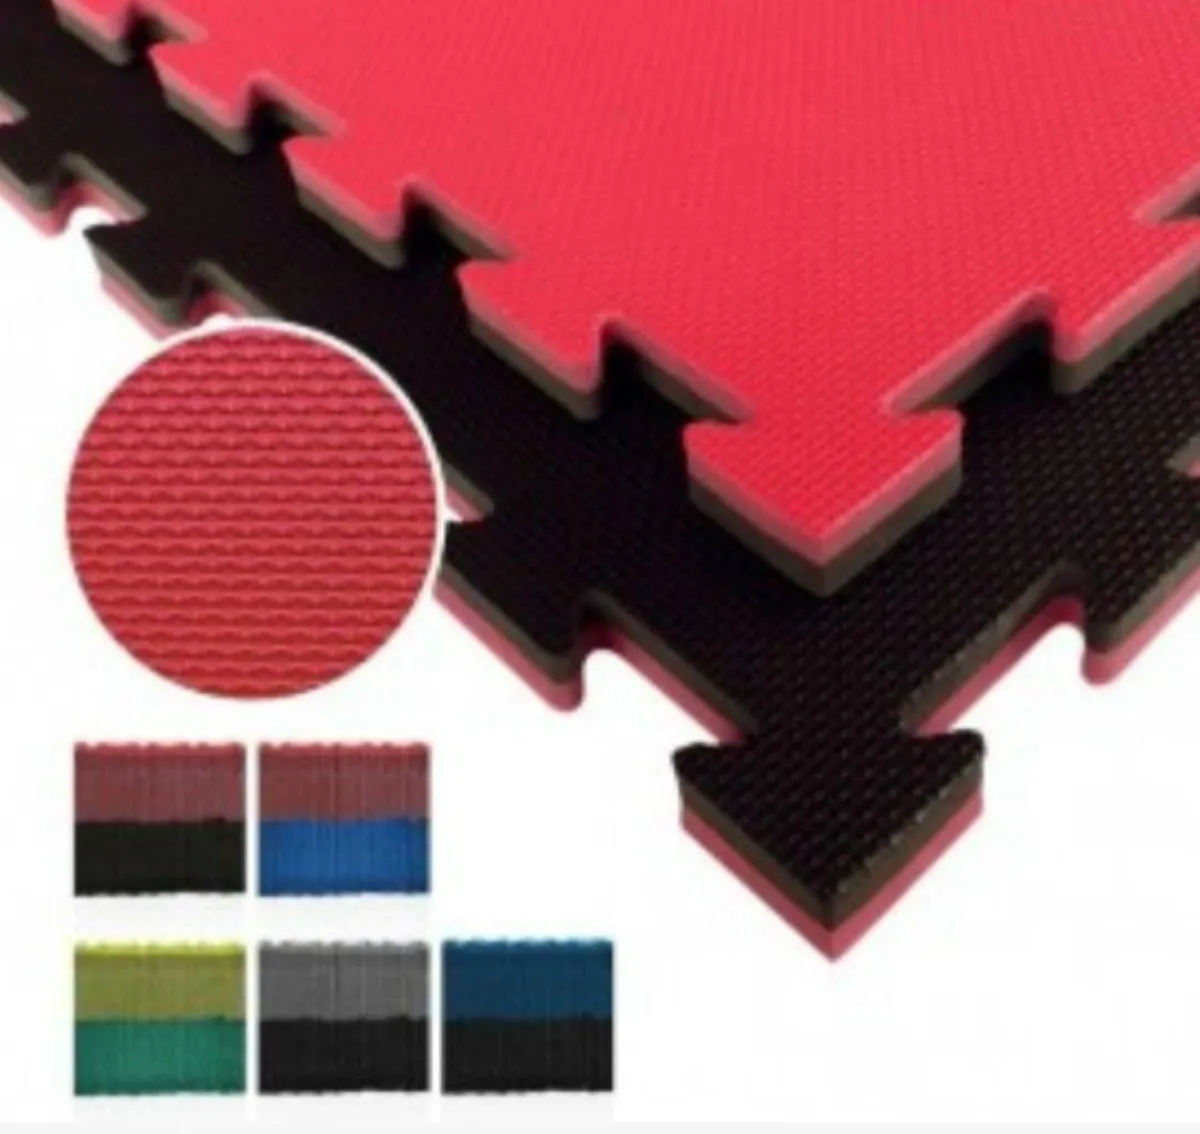 Martial arts mat Tatami E20X red/black 100x100 cm x 2cm